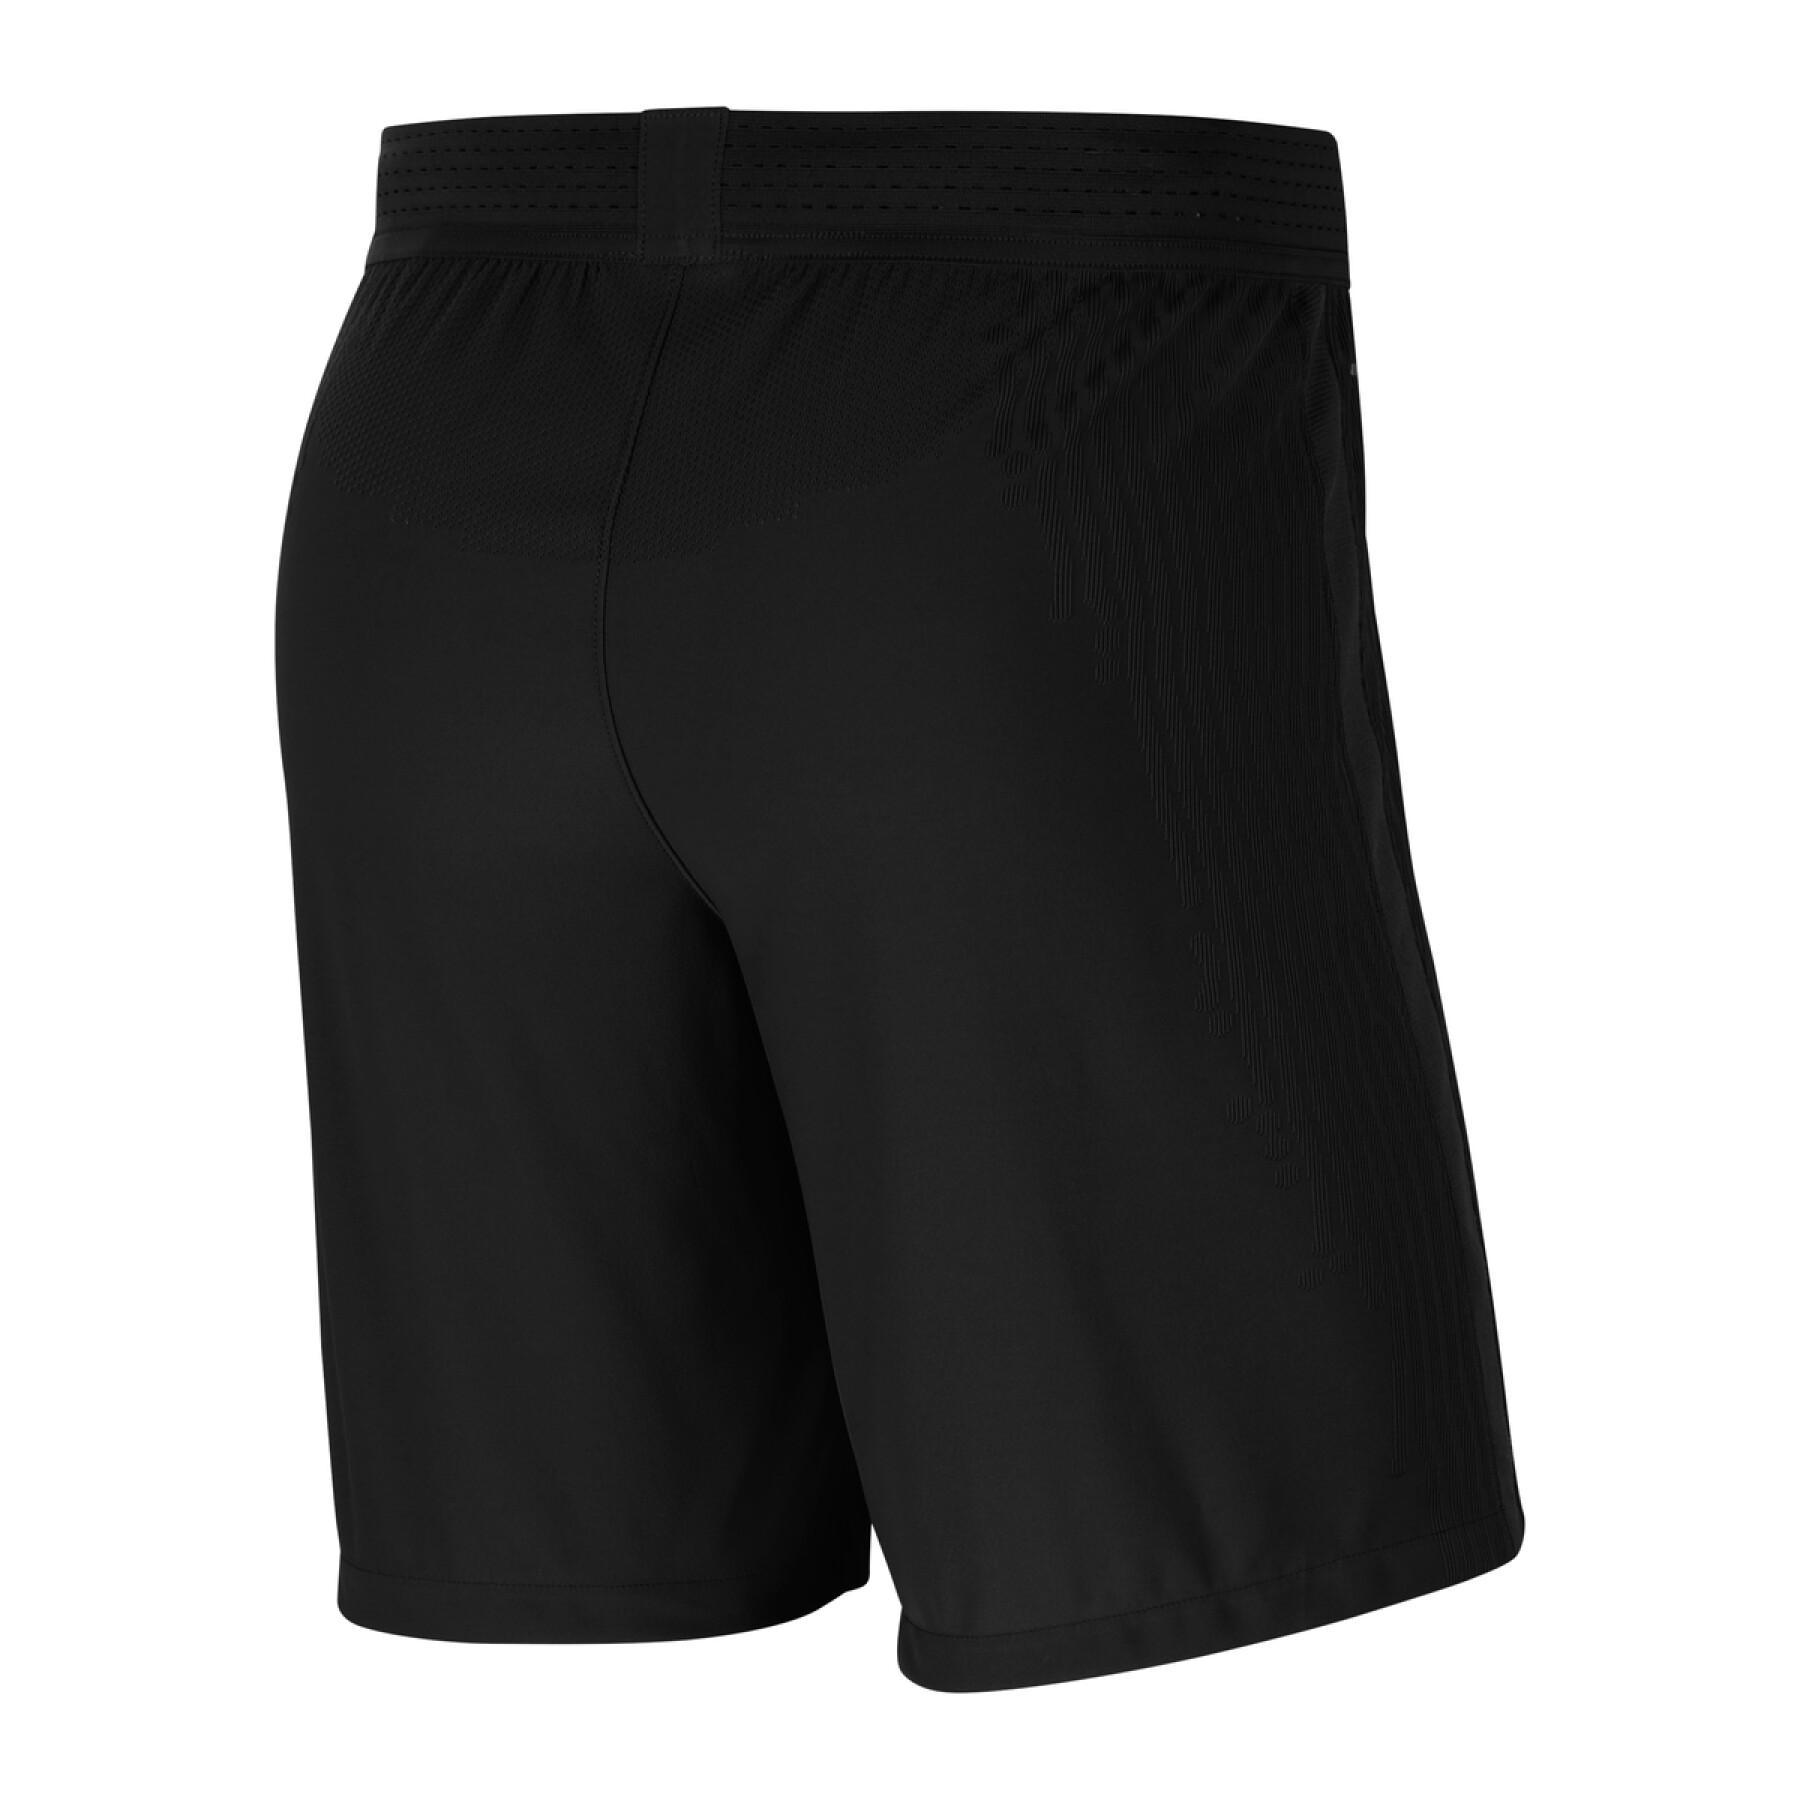 Short Nike Vapor Knit III - Nike - Training Shorts - Teamwear